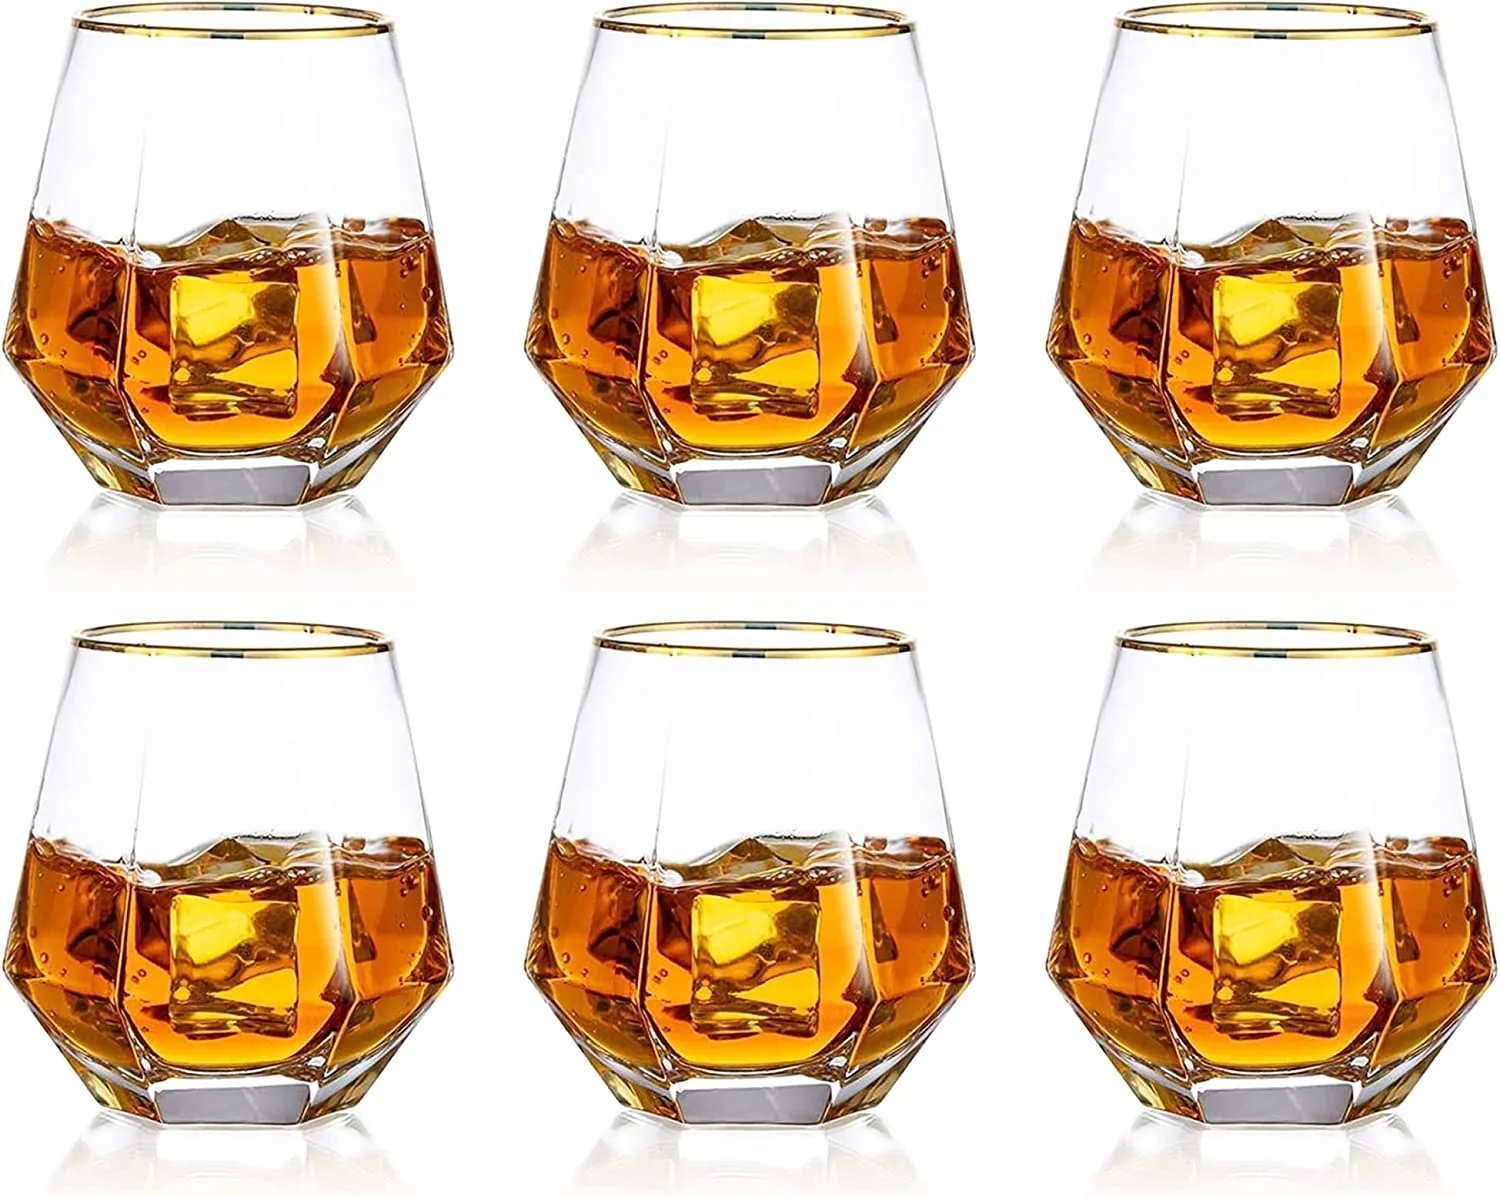 Hanobe Gold Rim Whiskey Glasses